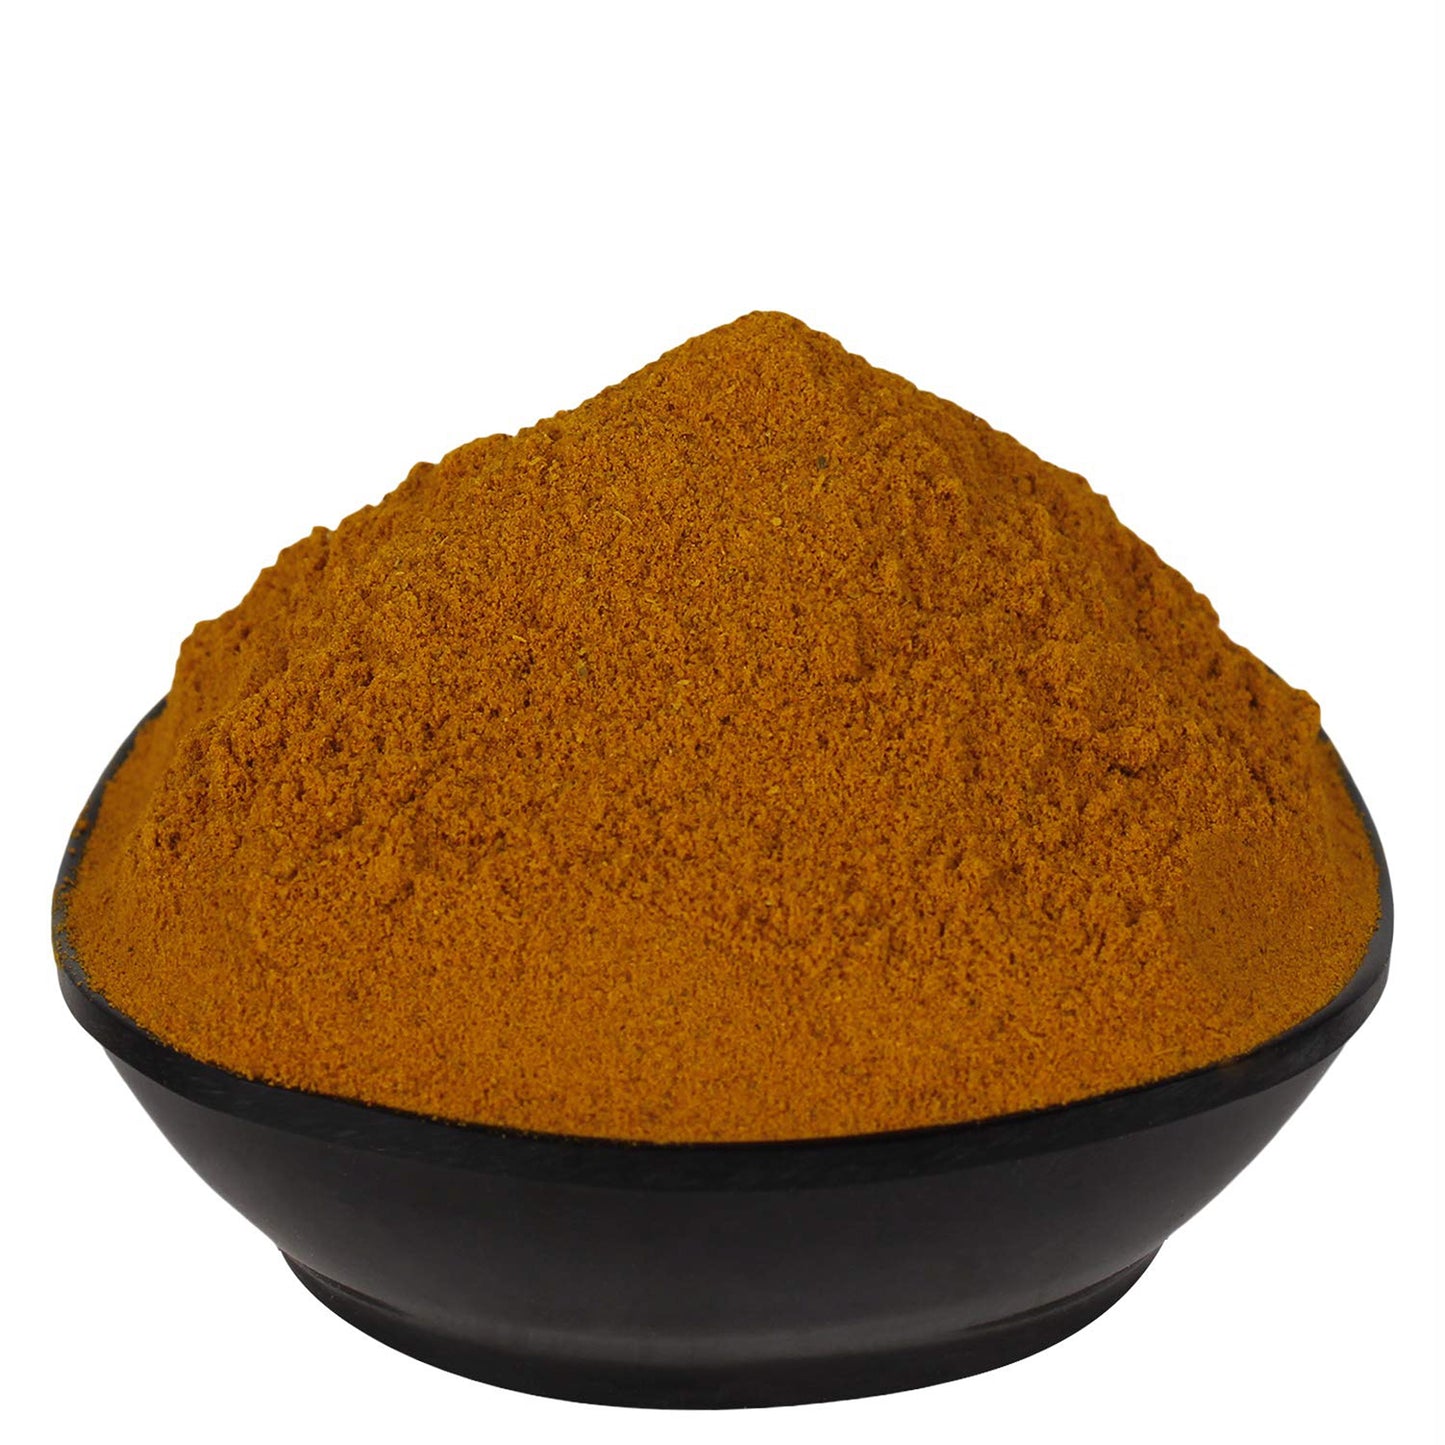 Amba Haldi Powder - Jangli Haldi - Curcuma Aromatica - Wild Turmeric Powder